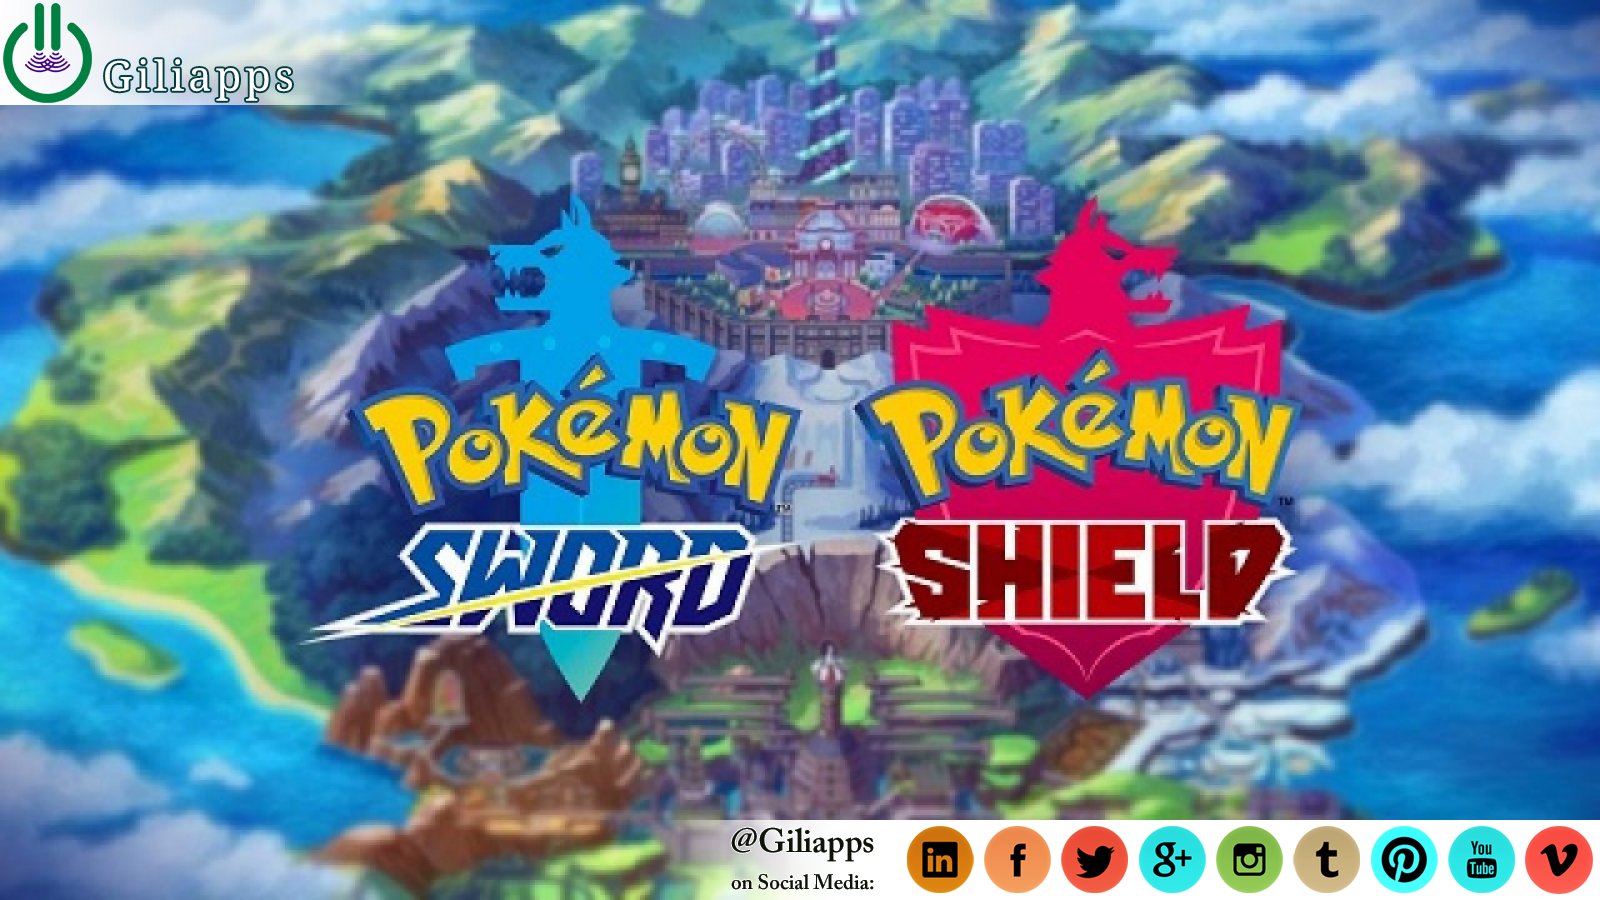 pokémon sword and shield